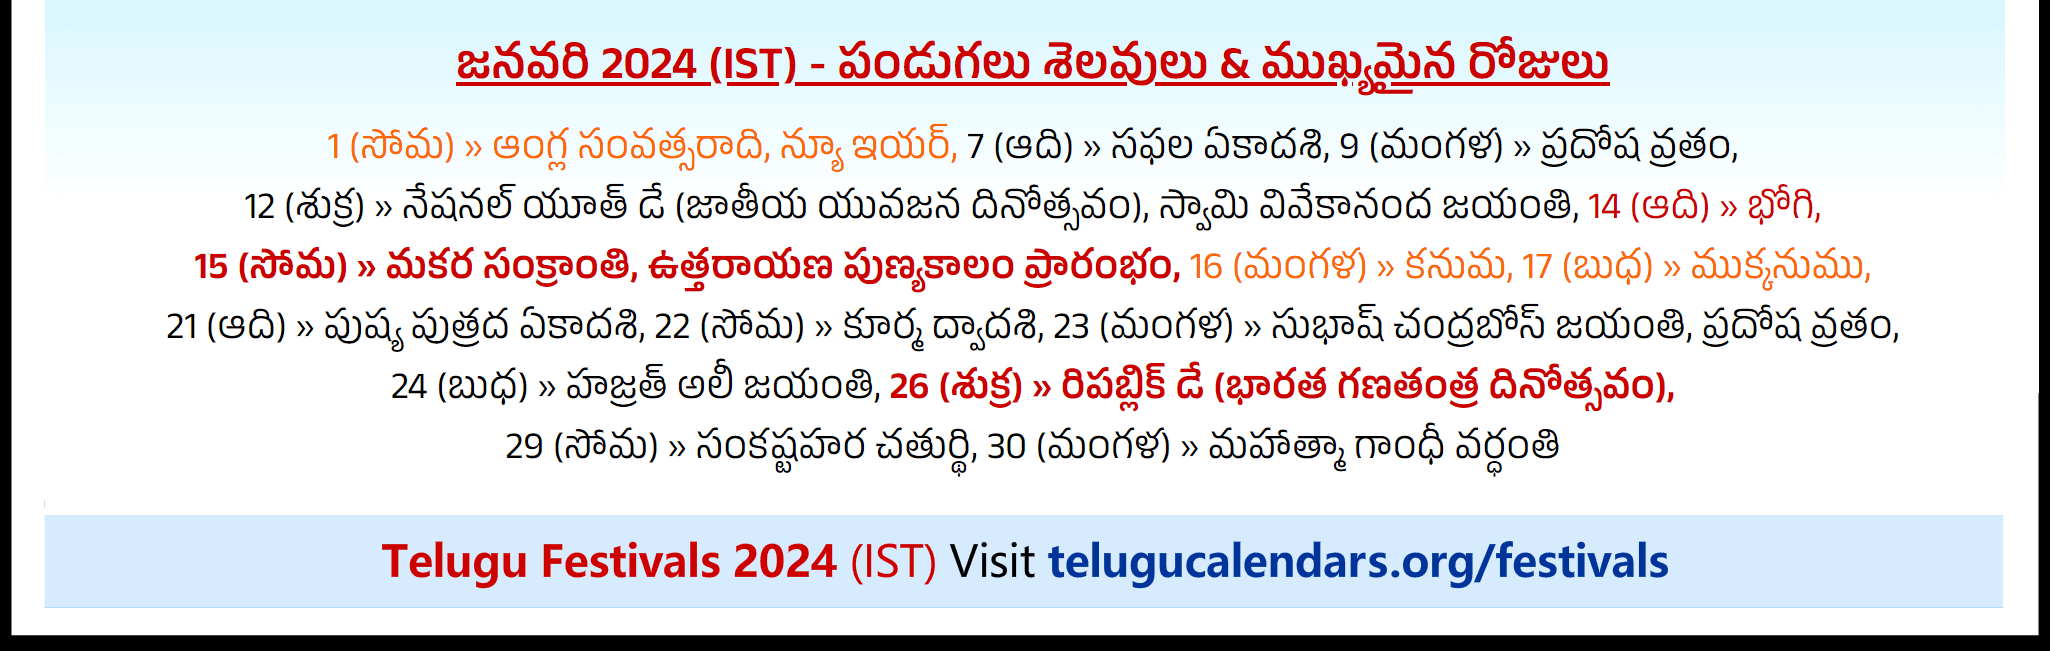 Telugu Festivals 2024 January Atlanta